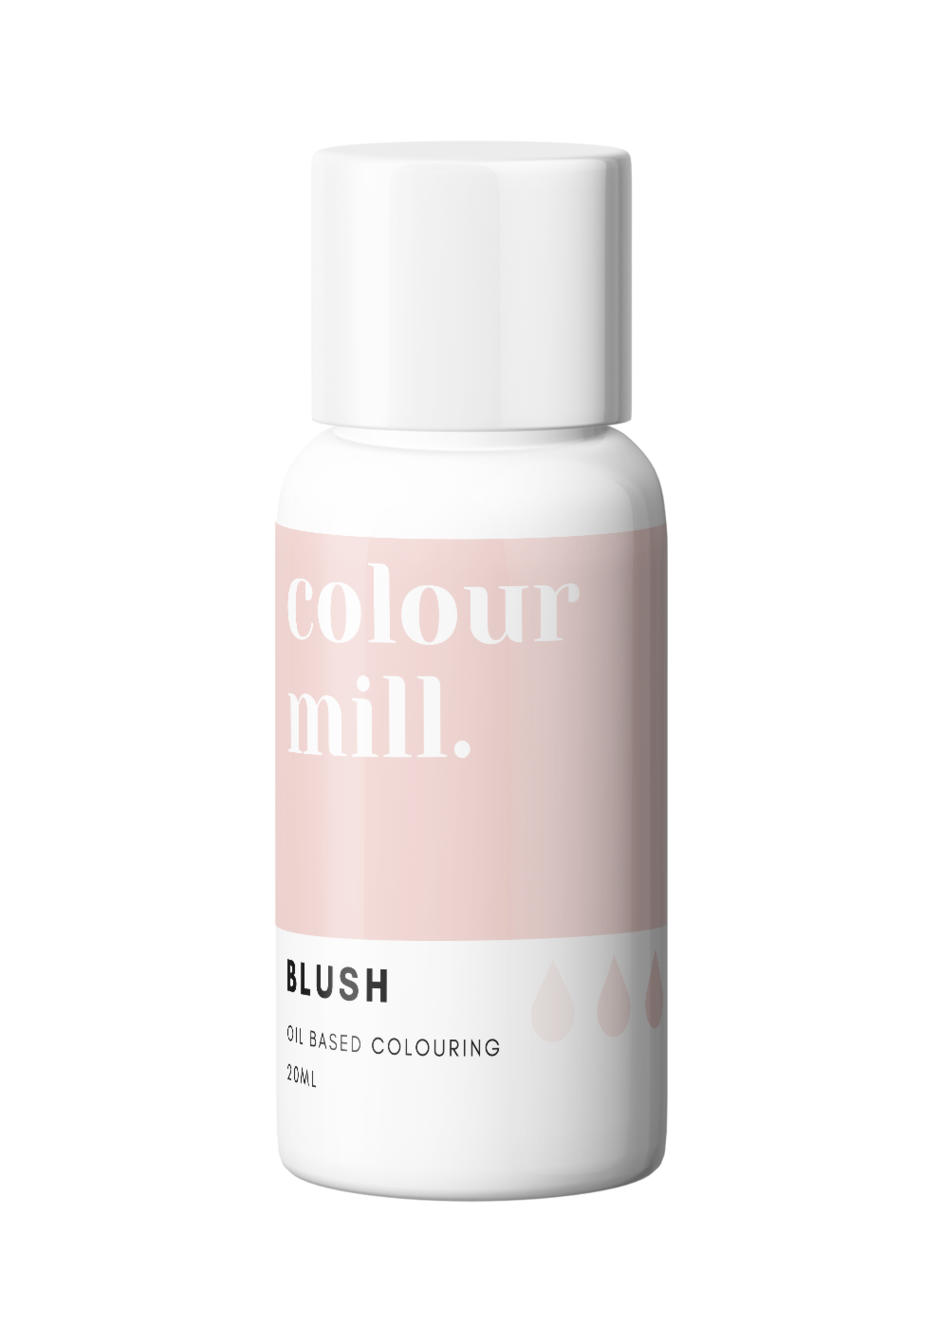 Blush, 20ml, Colour Mill Oil Based Colouring